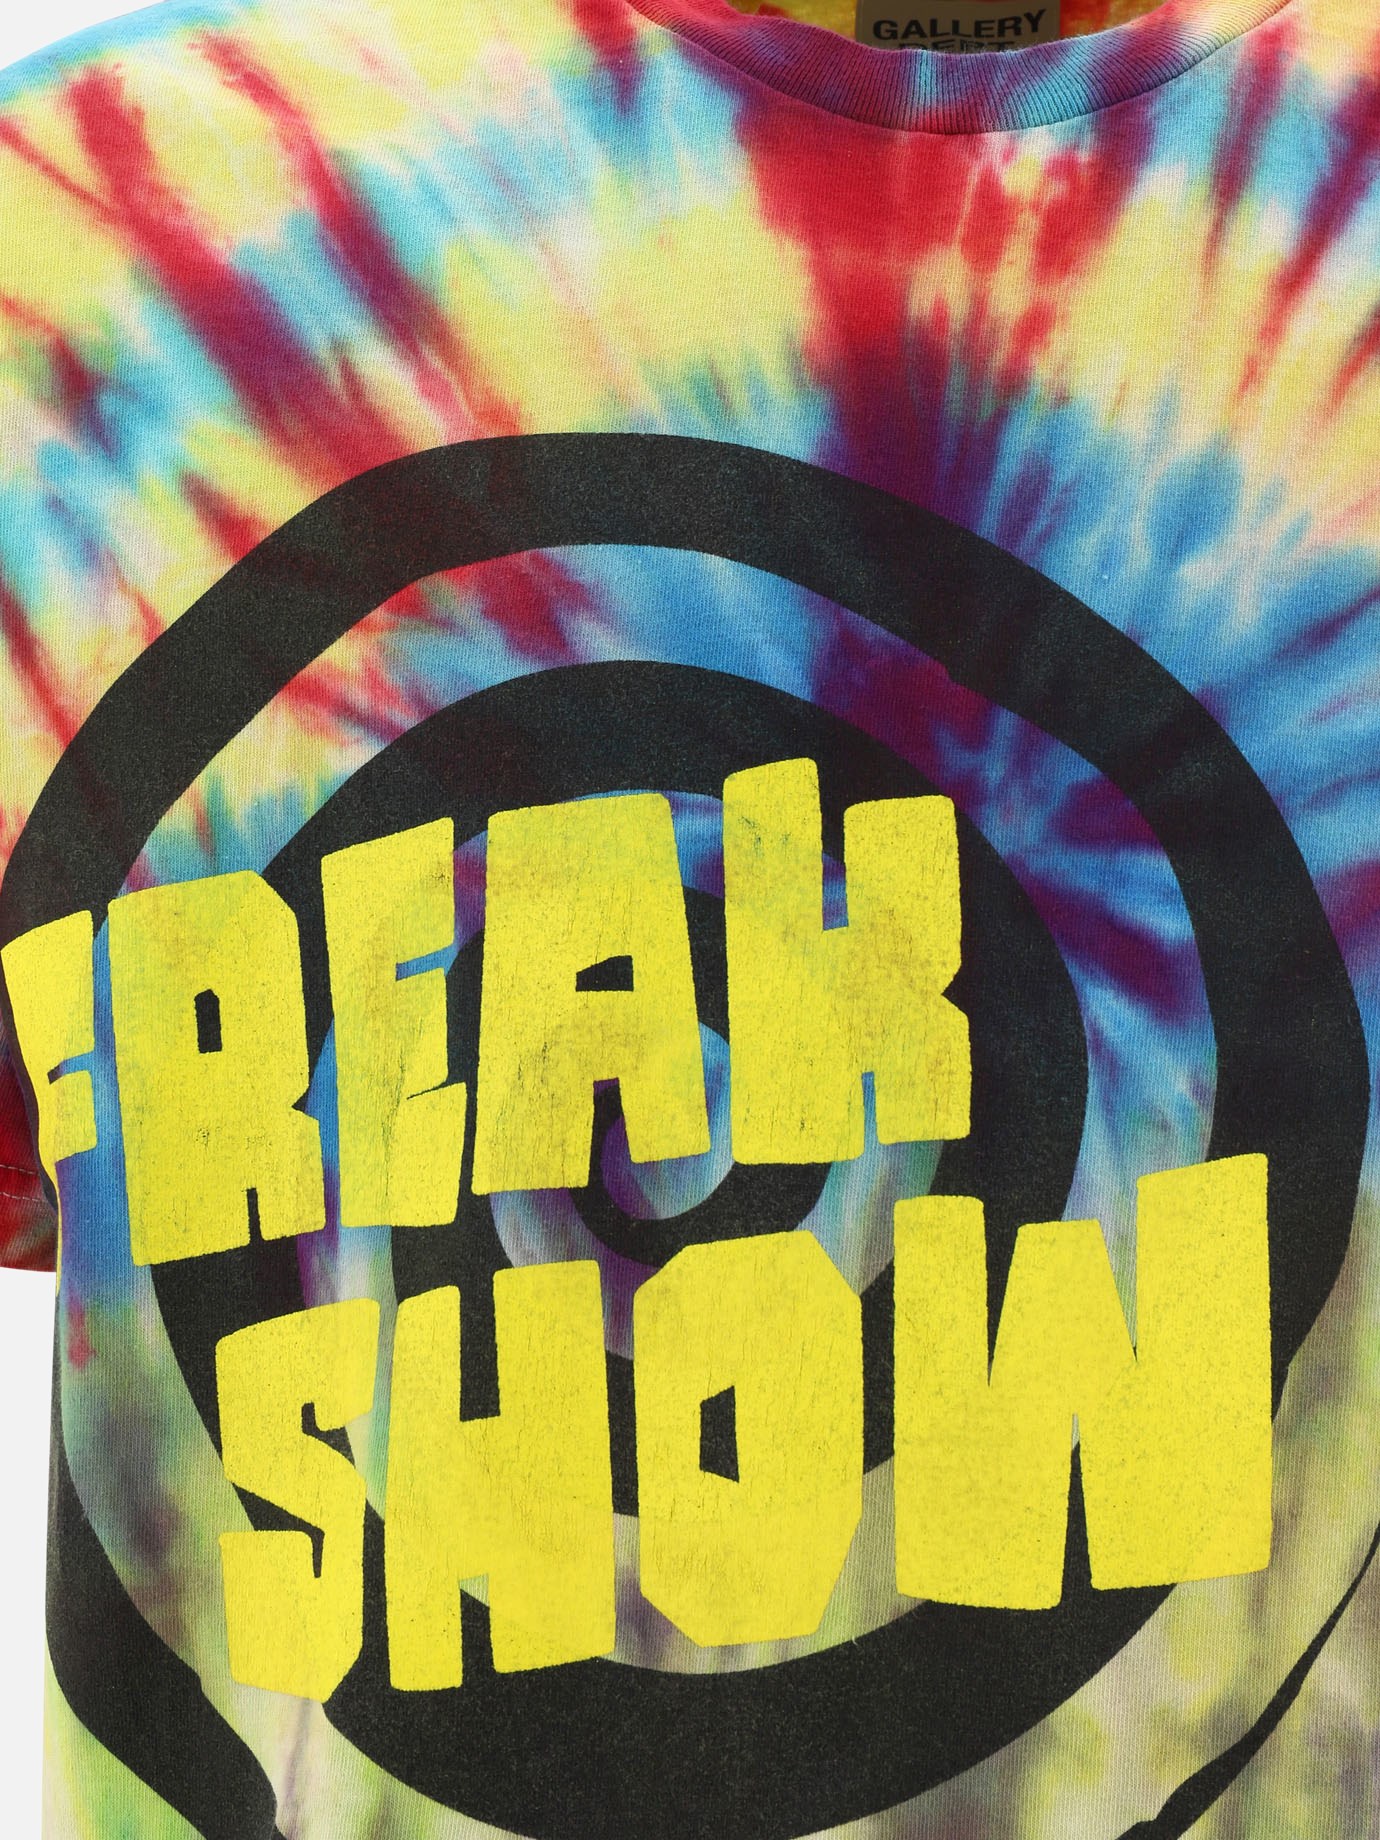 T-shirt  Freak Show  by Gallery Dept.